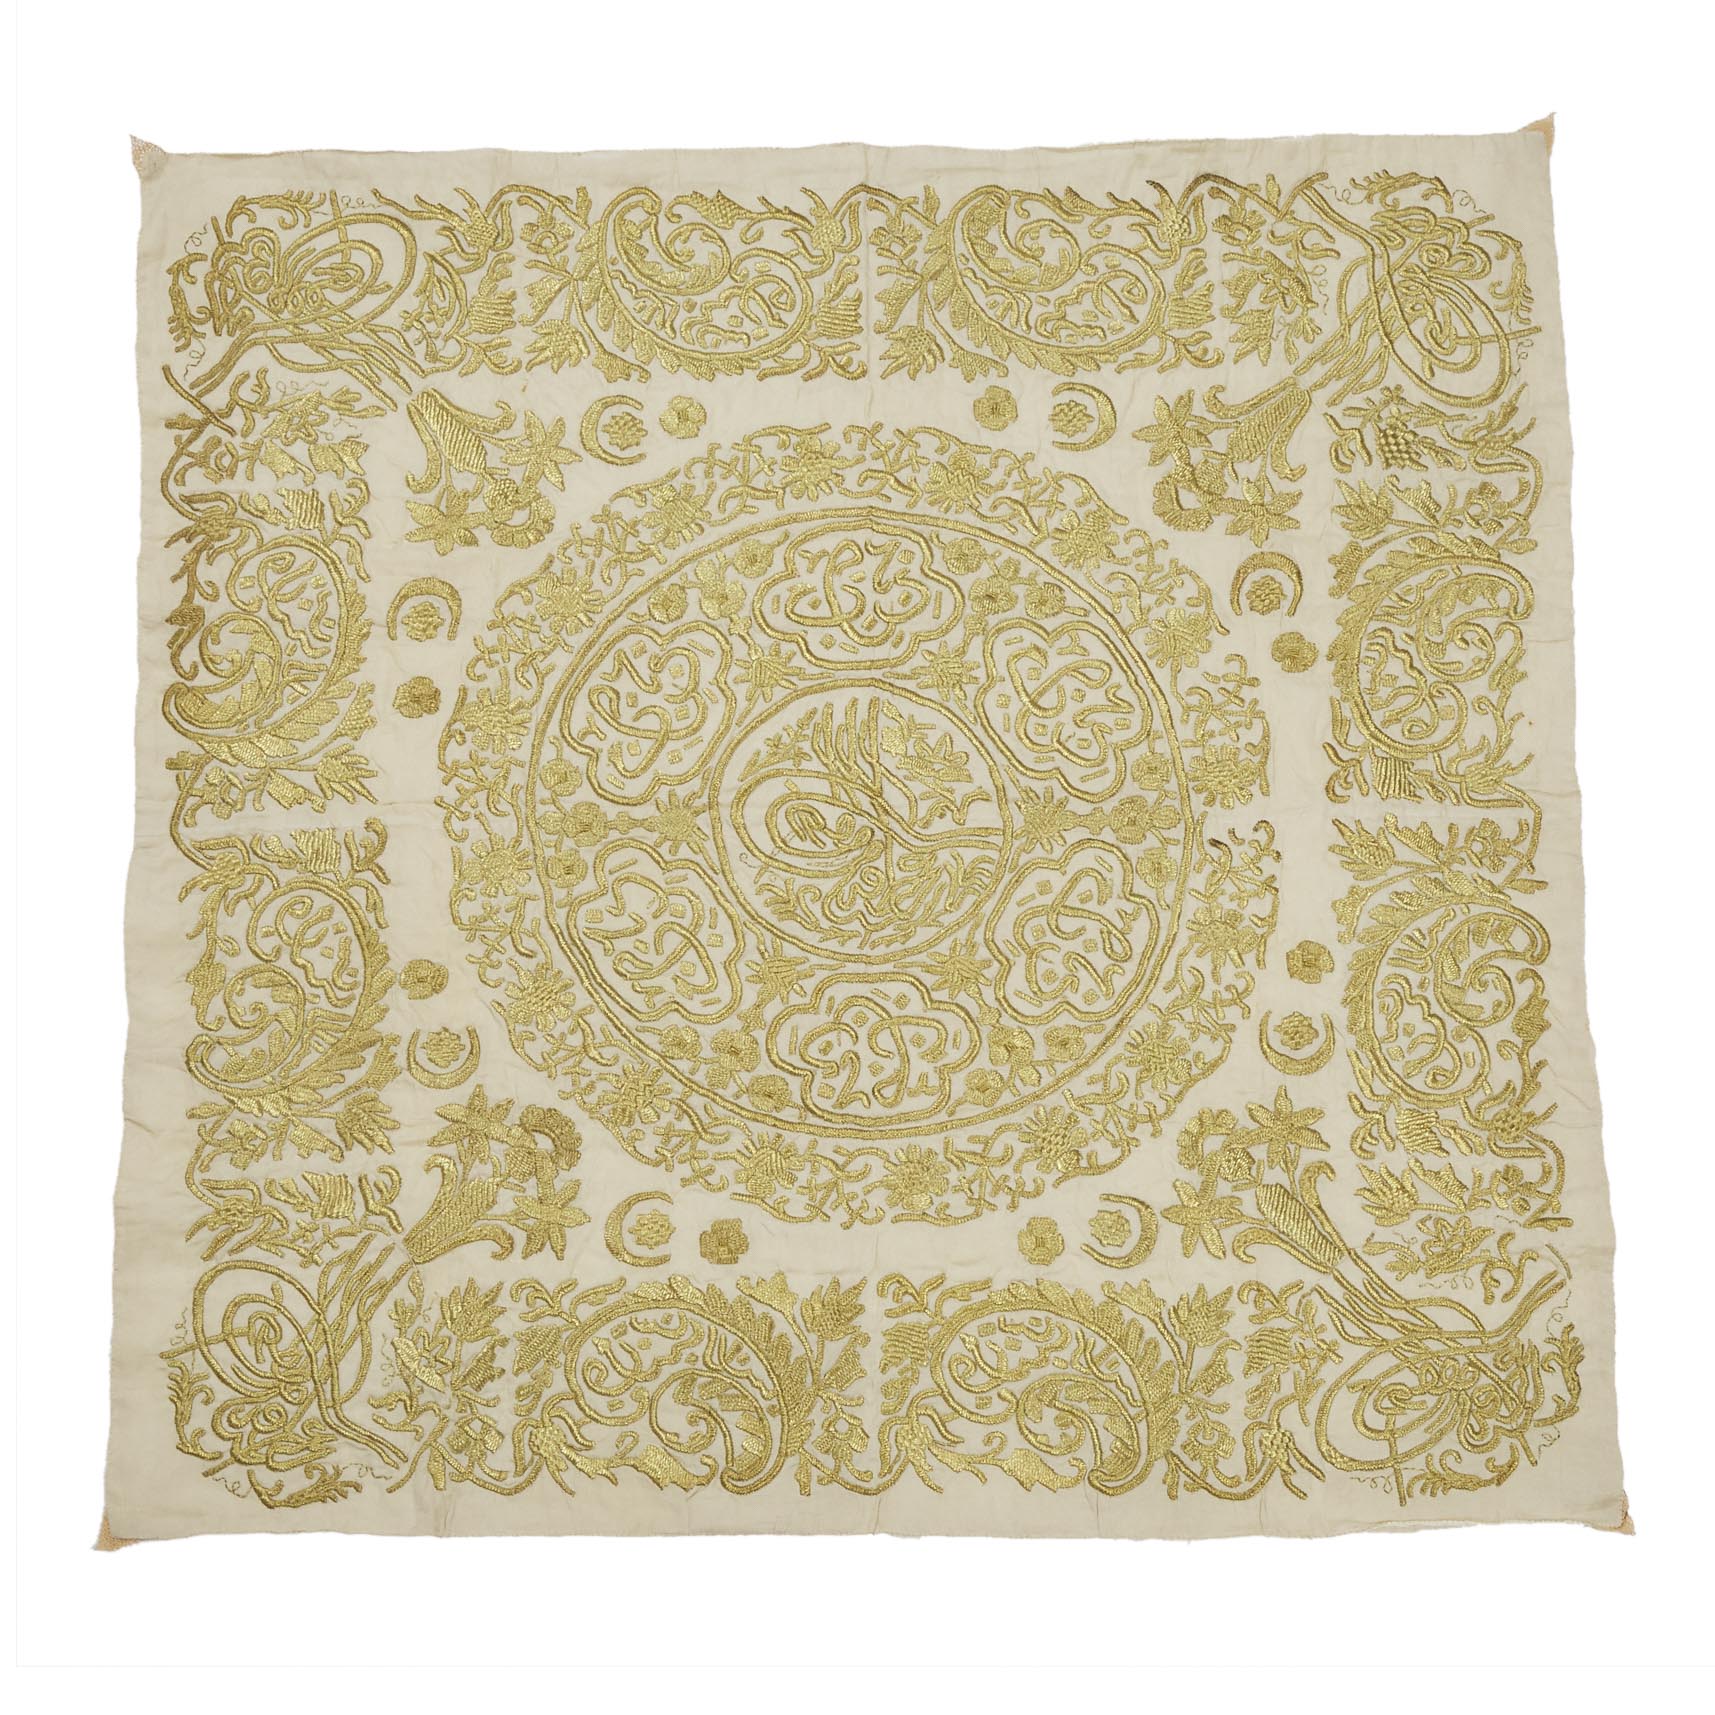 Ottoman Empire Table Cloth with gold metallic threads on silk, c.1900